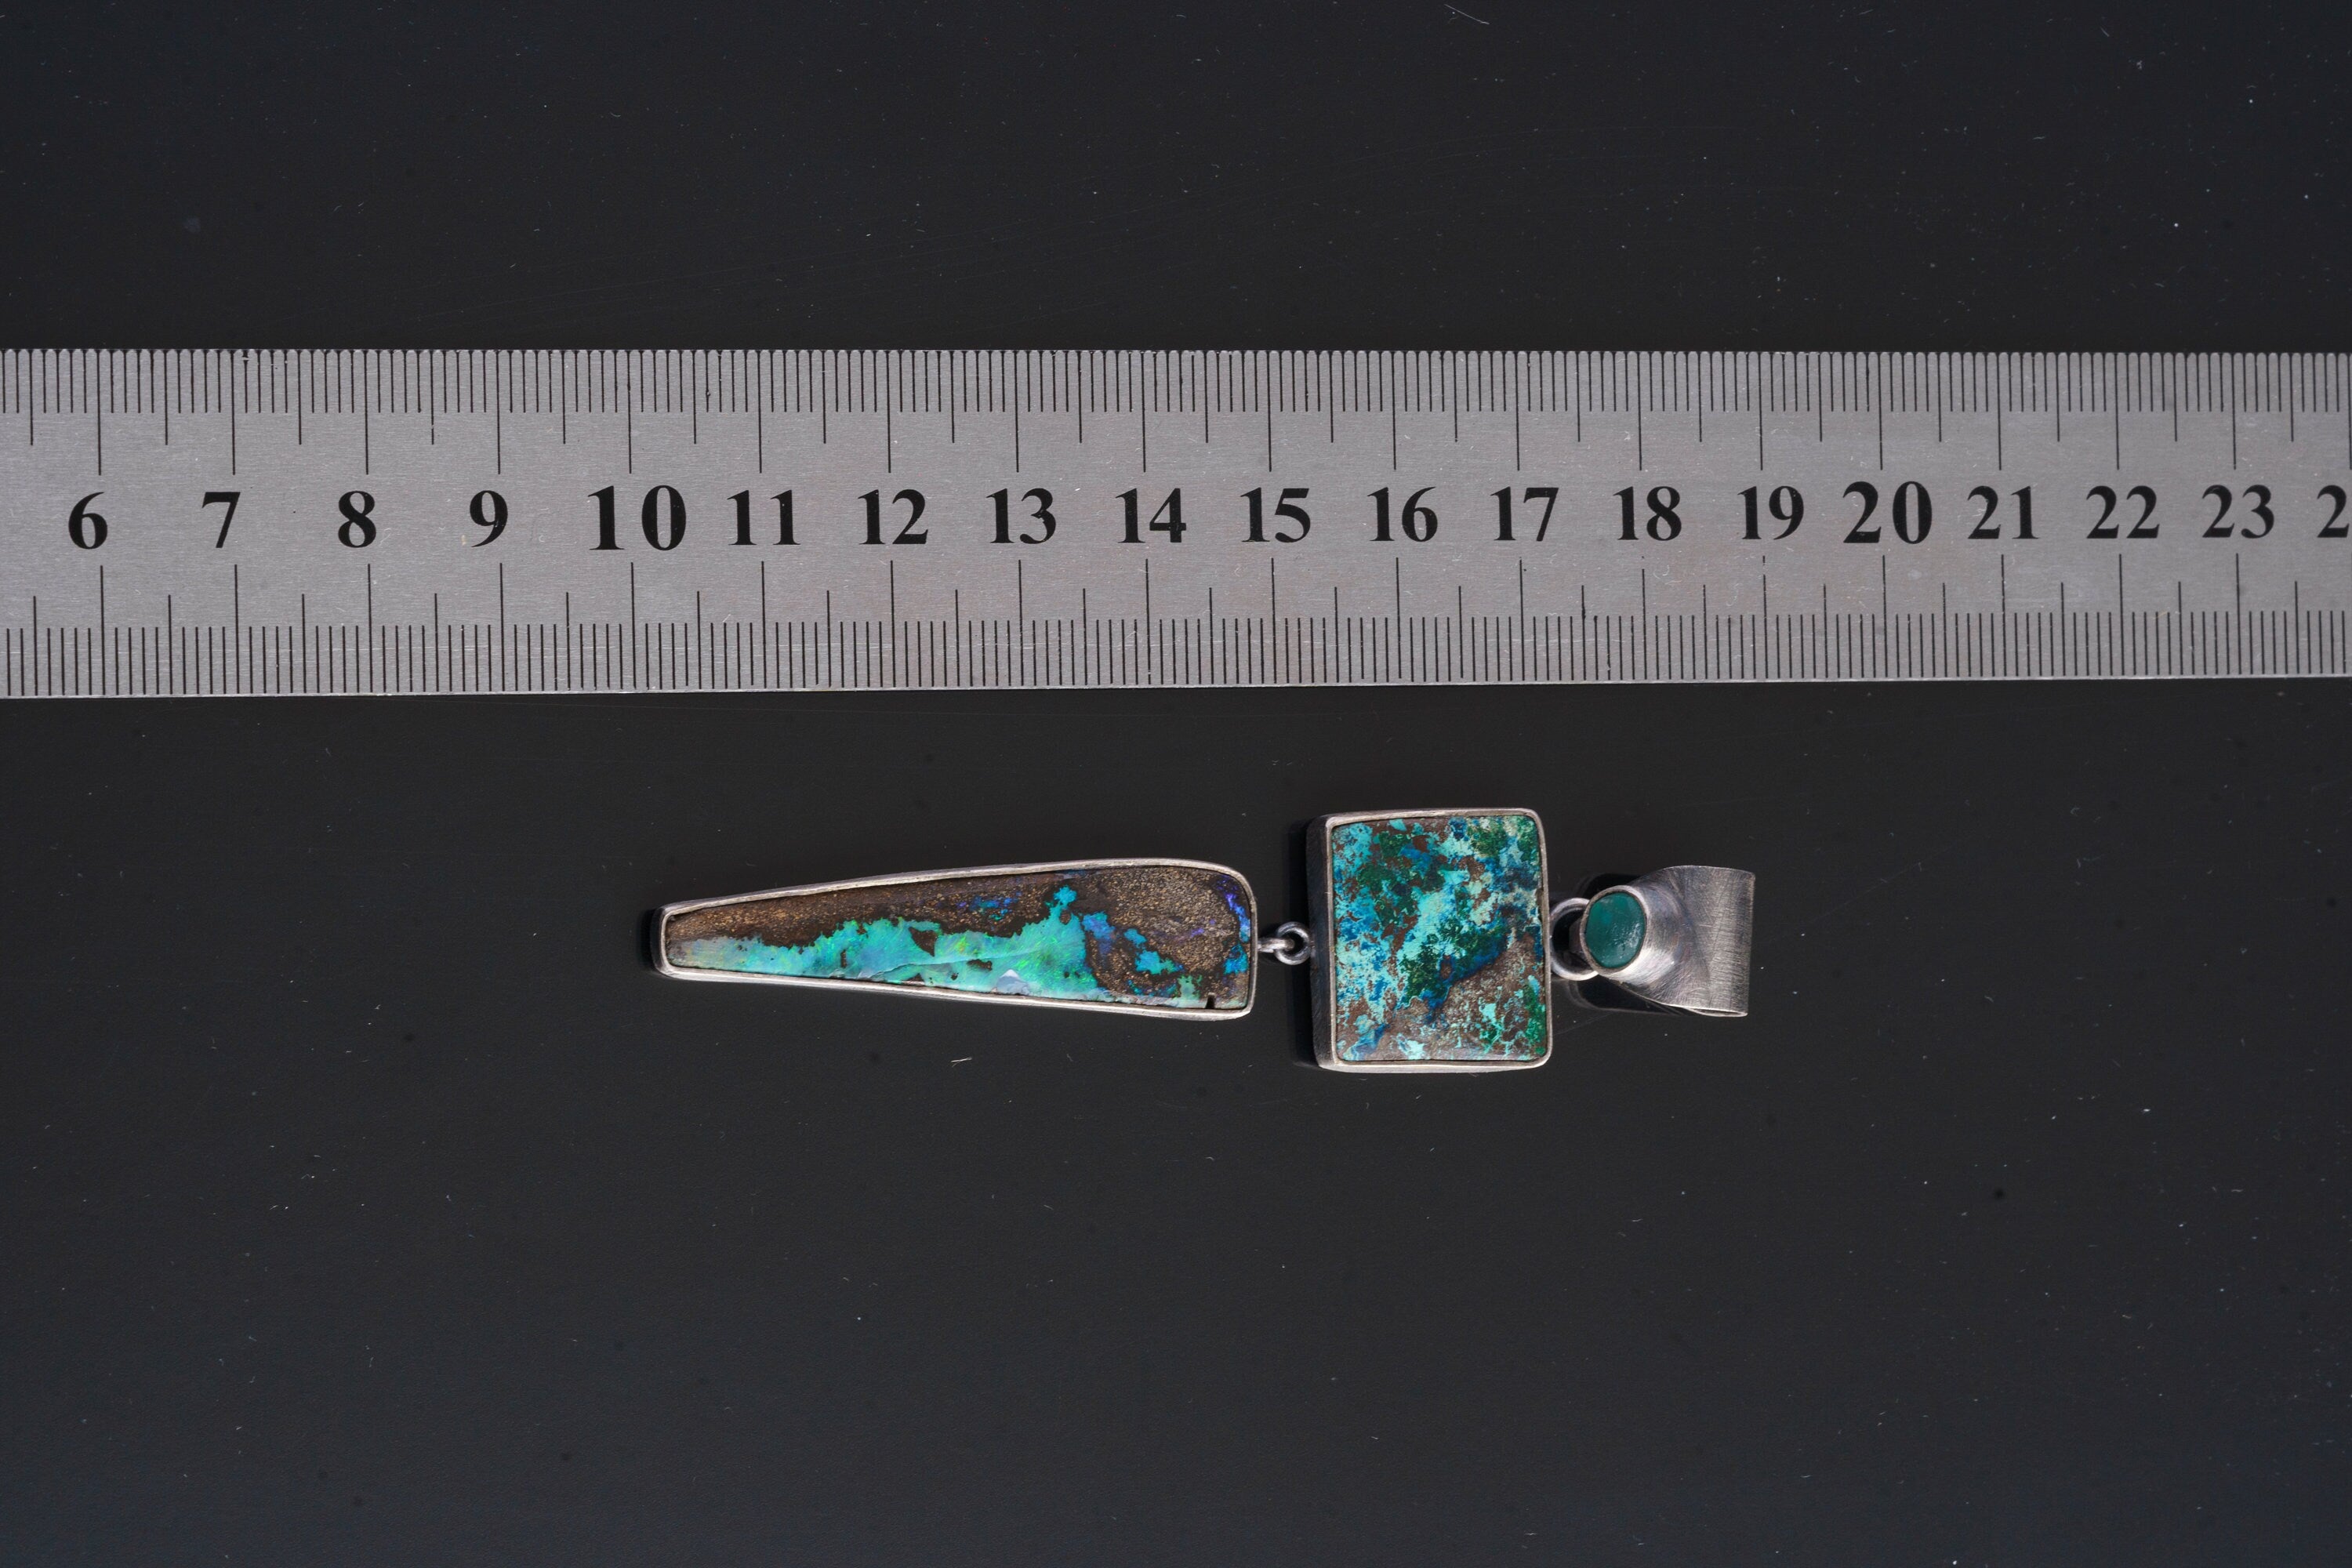 Azure Enigma - Australian Boulder Opal, Chrysocolla, Aqua Apatite in Textured Oxidized Sterling Silver Pendant